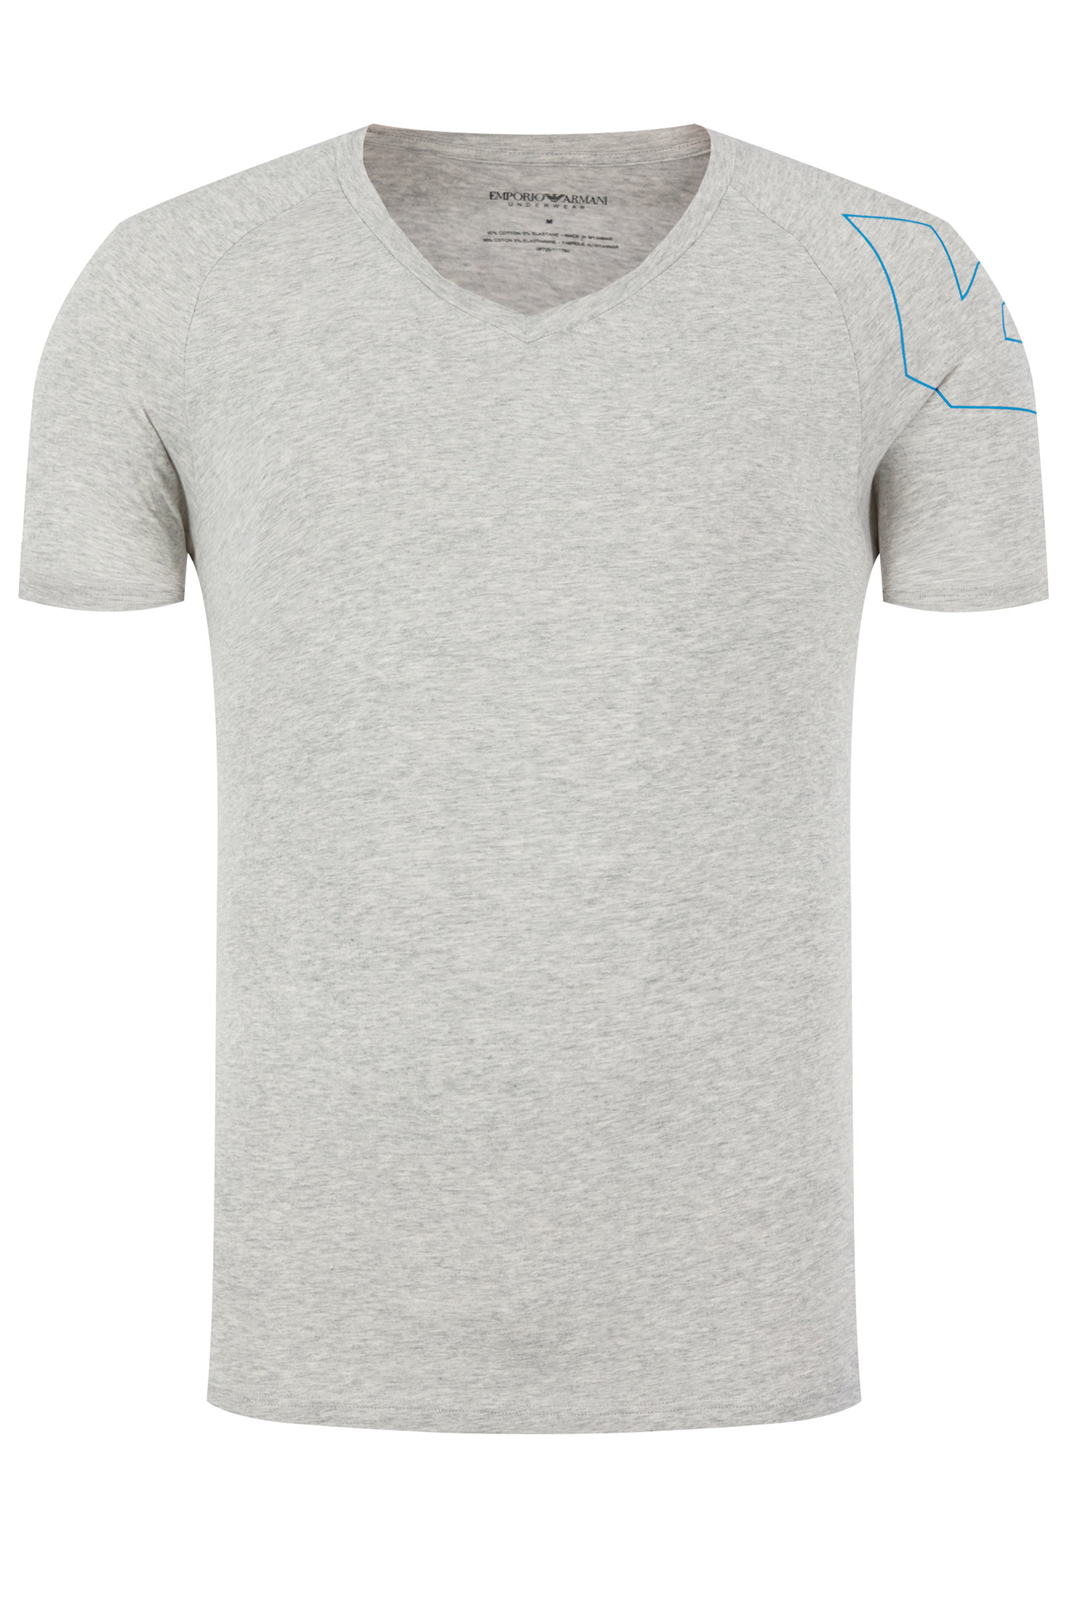 Tee-shirt gris manches courtes Emporio Armani - 111760